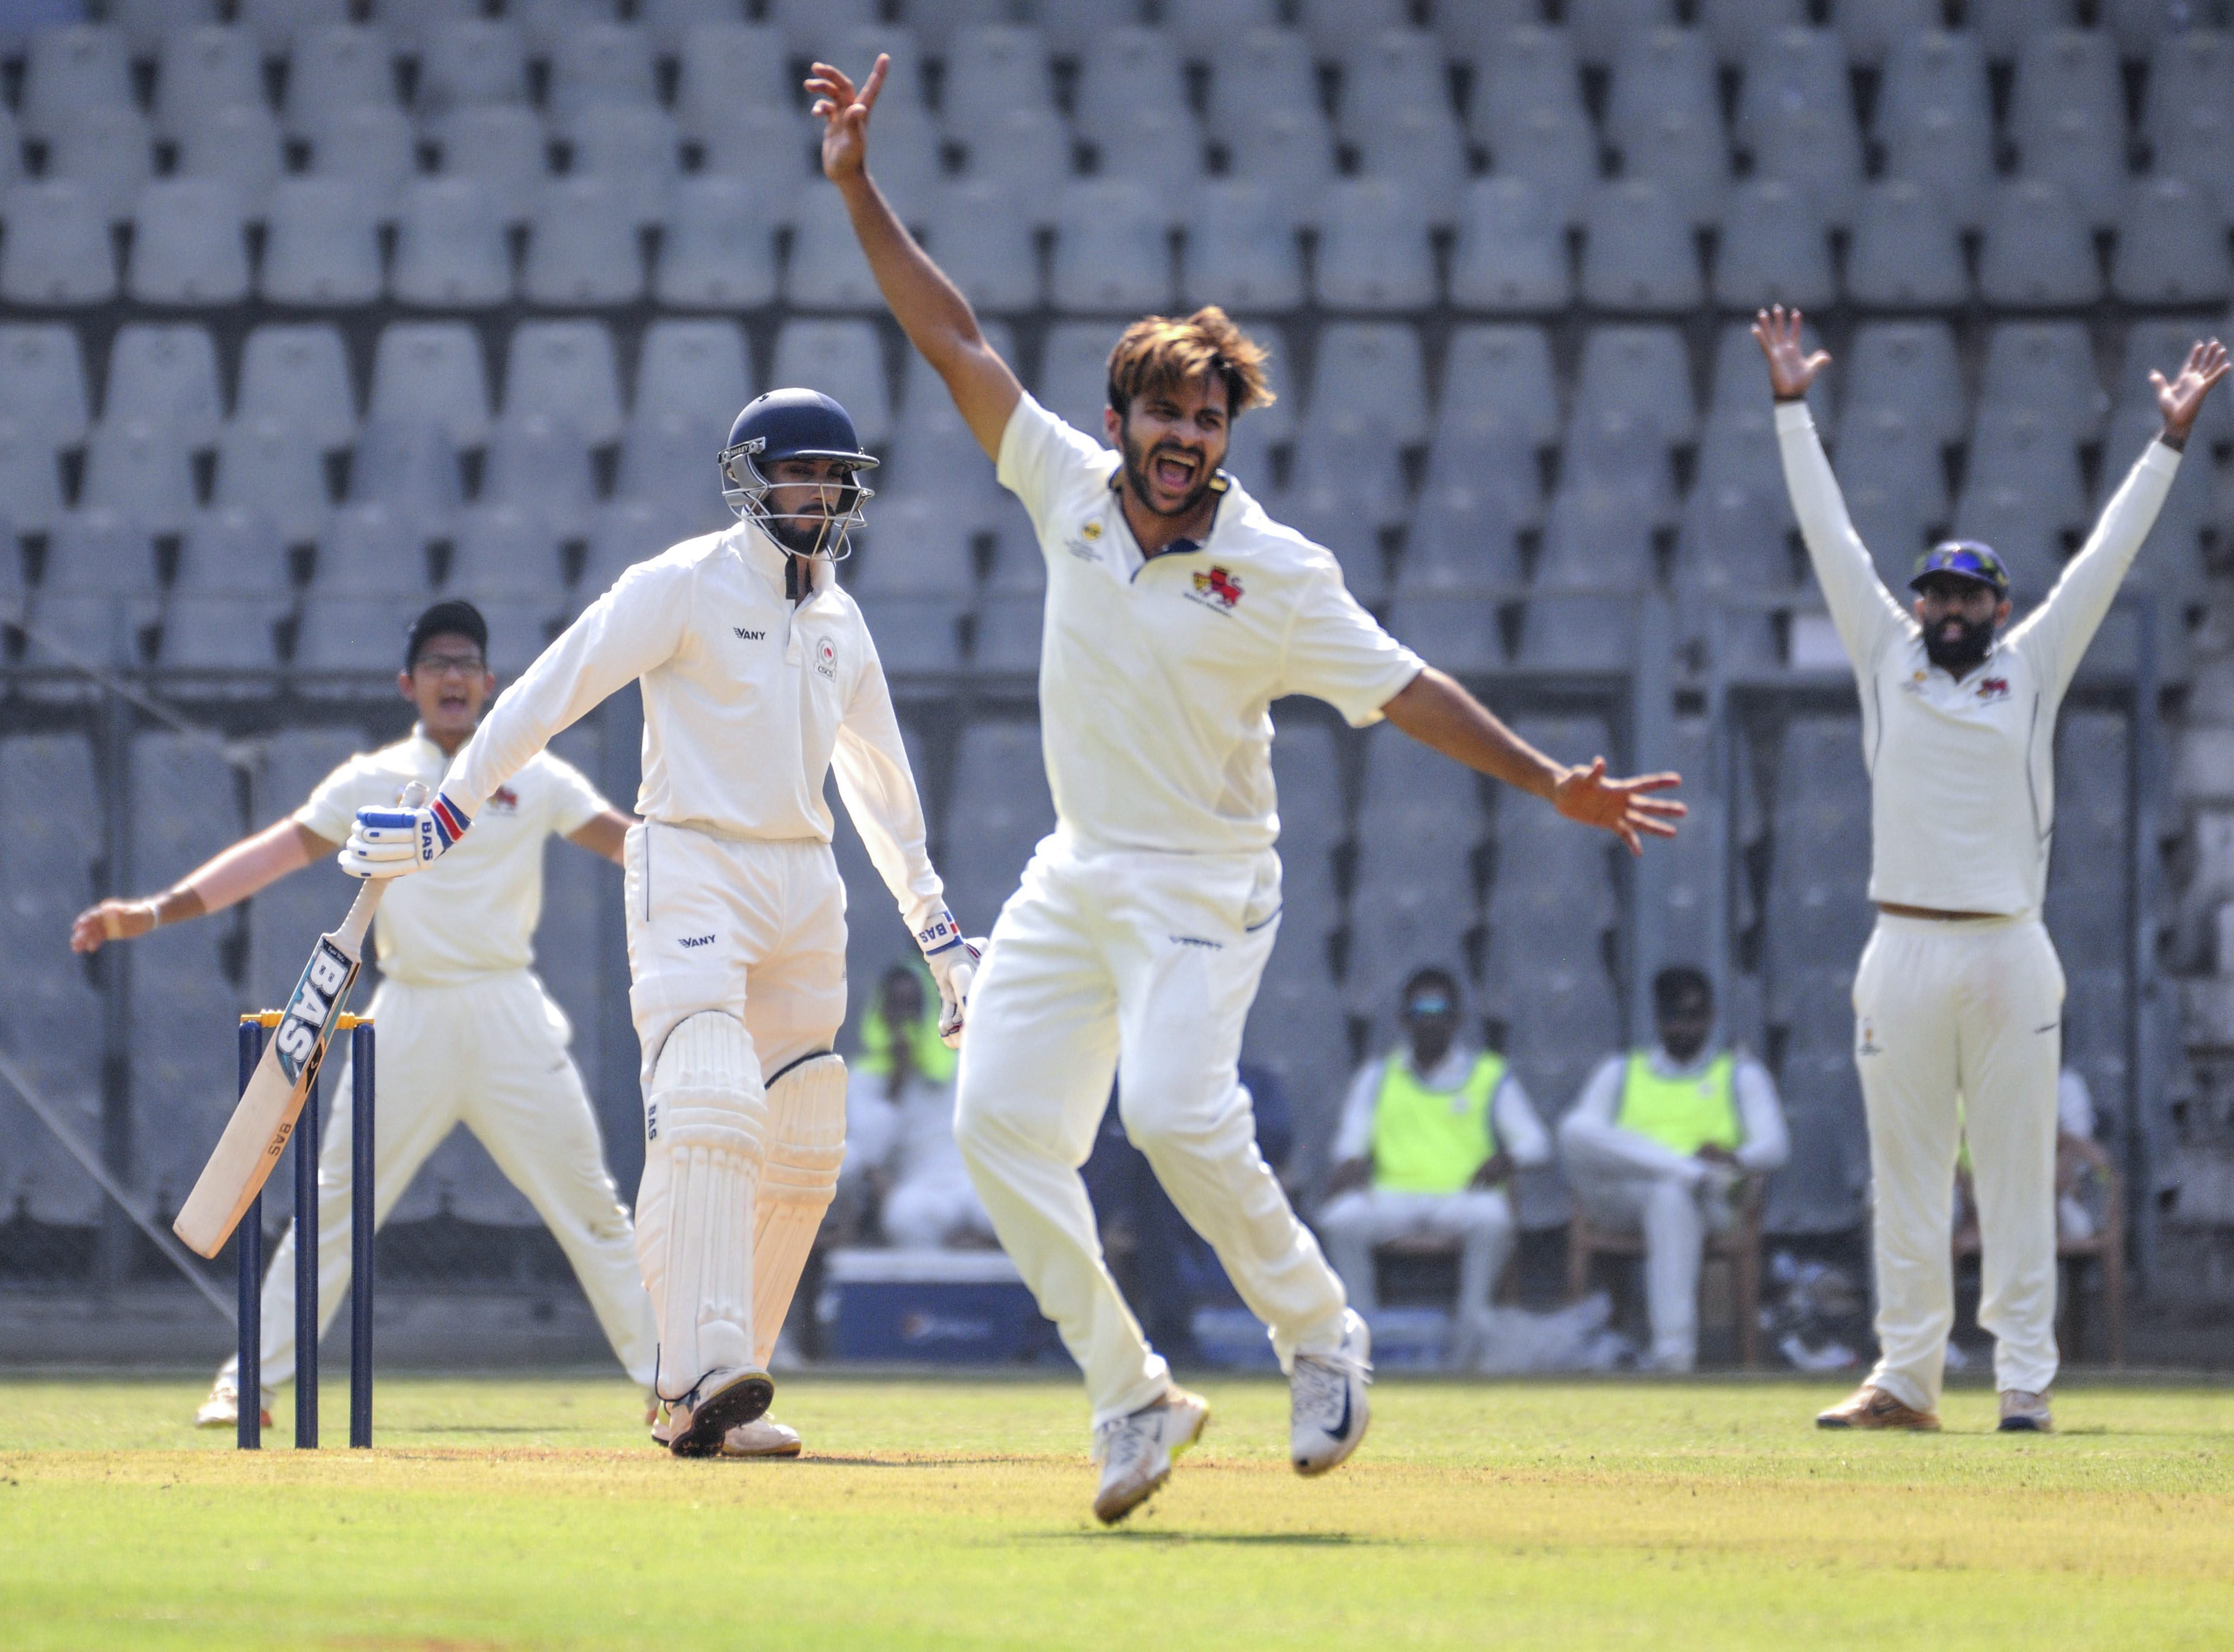 Mumbai bowler Shardul Thakur reacts after taking a wicket during Ranji Trophy cricket match against Chhattisgarh, in Mumbai - PTI